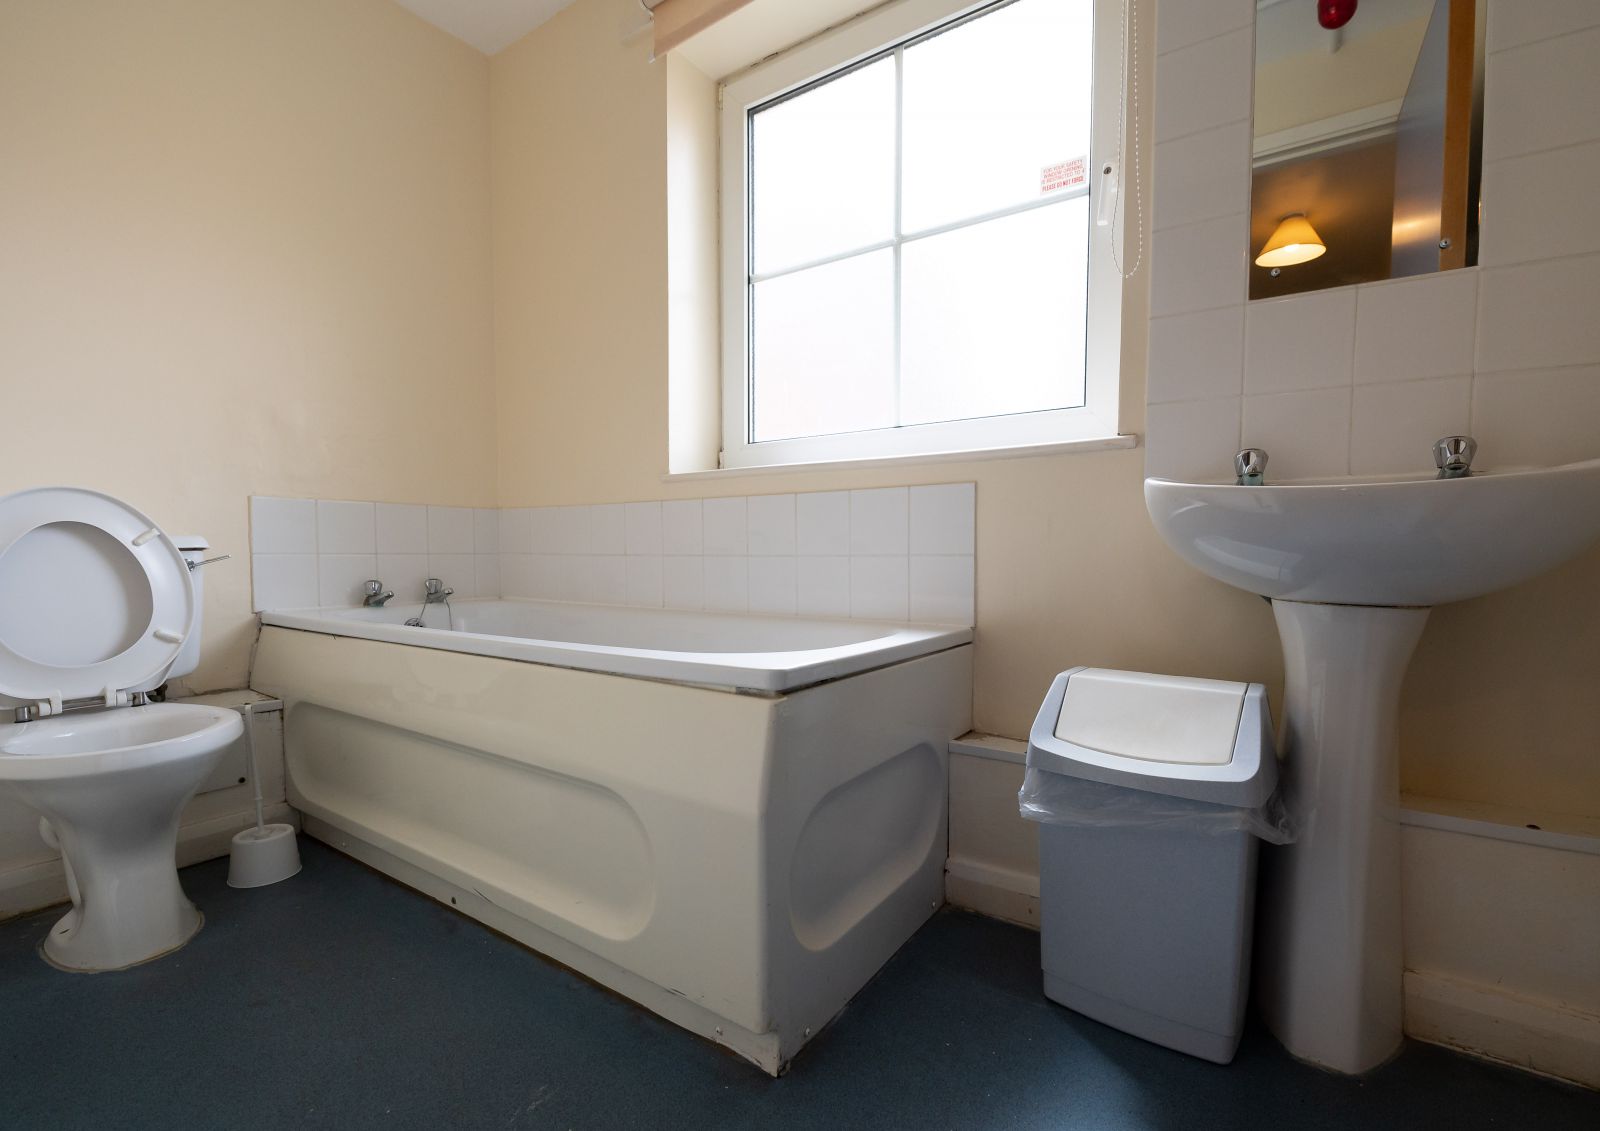 Lewes Court standard shared bathroom